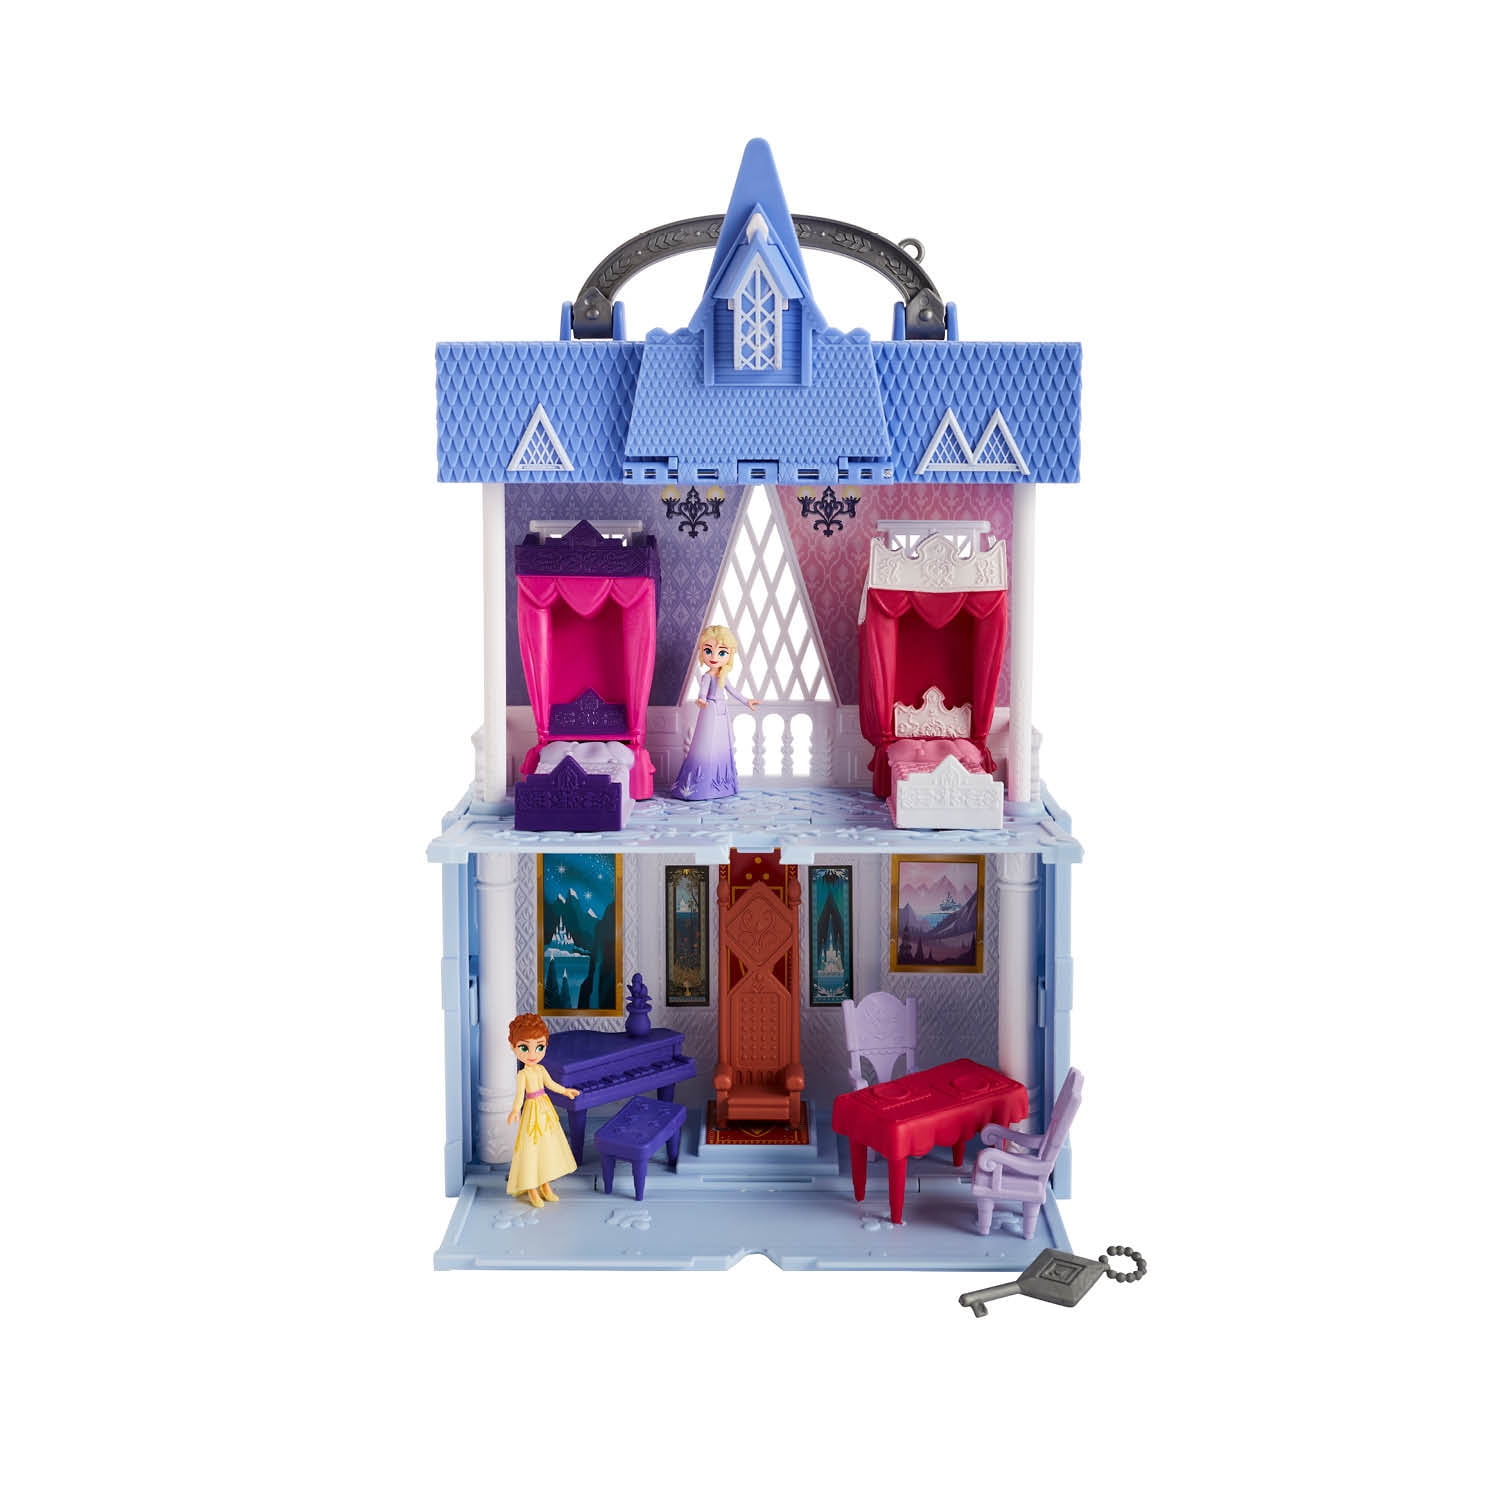 Disney Princess Frozen 2 Magical Forest Adventure Deluxe Pop-up Tent Anna Elsa for sale online